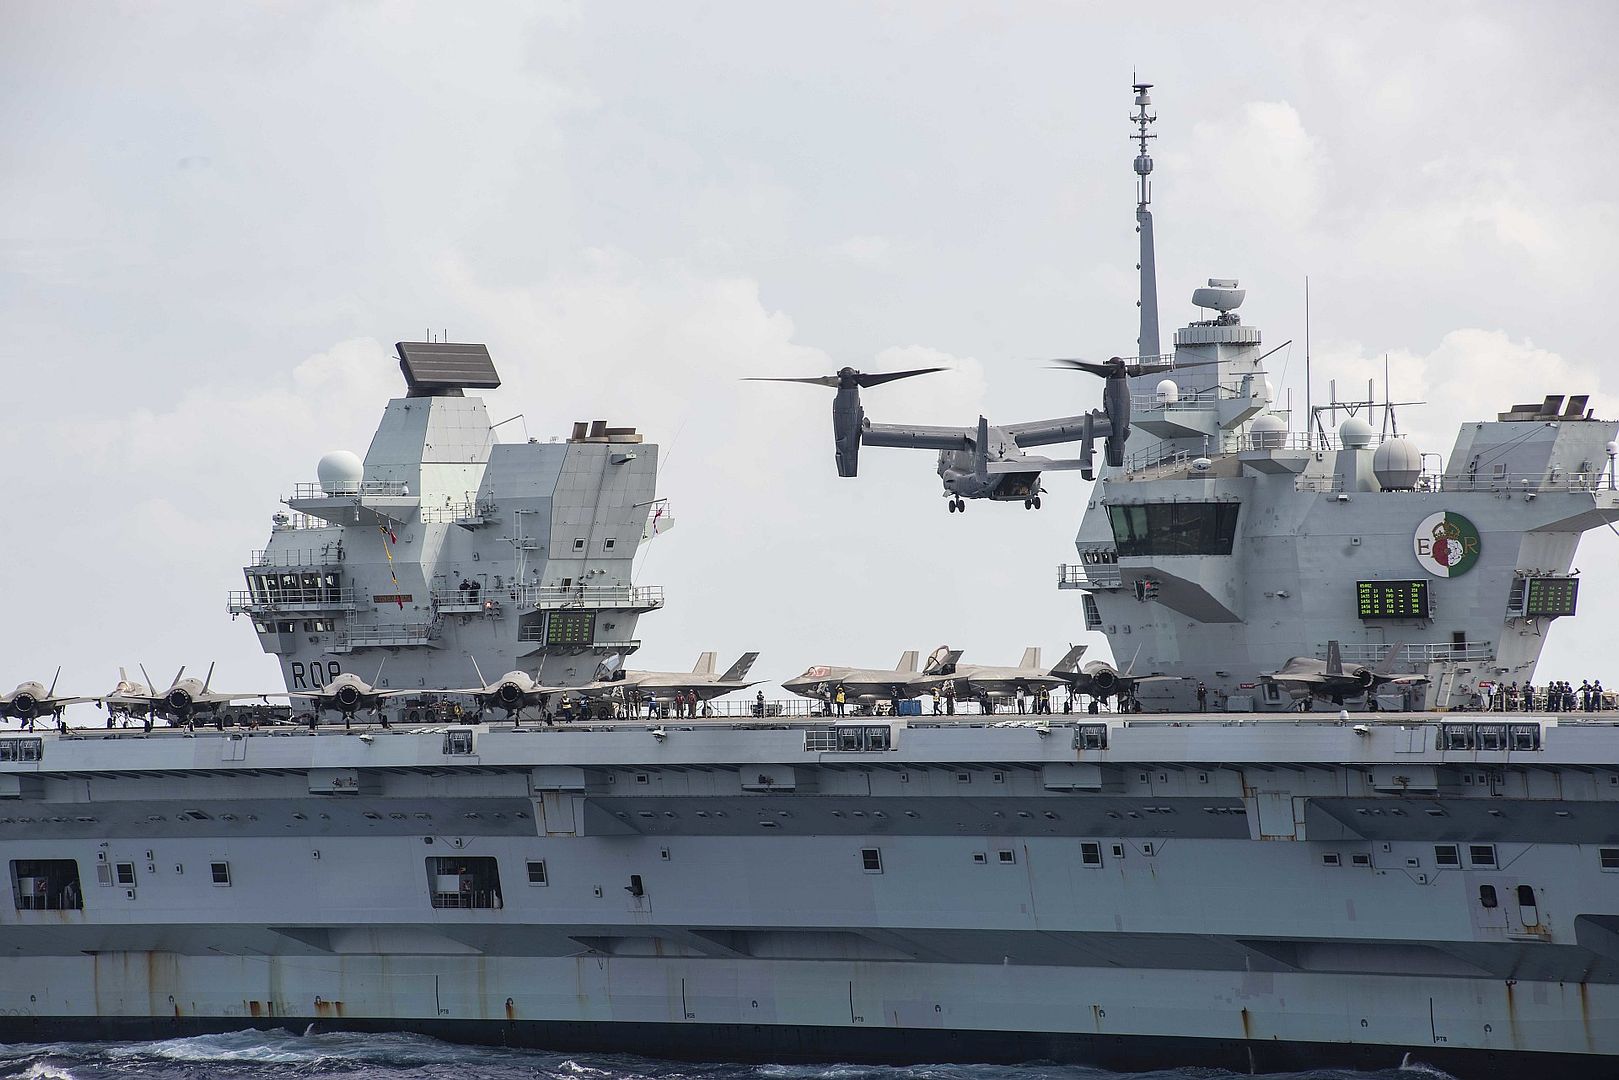 22 Osprey Lands On The Flight Deck Of The Royal Navy Aircraft Carrier HMS Queen Elizabeth